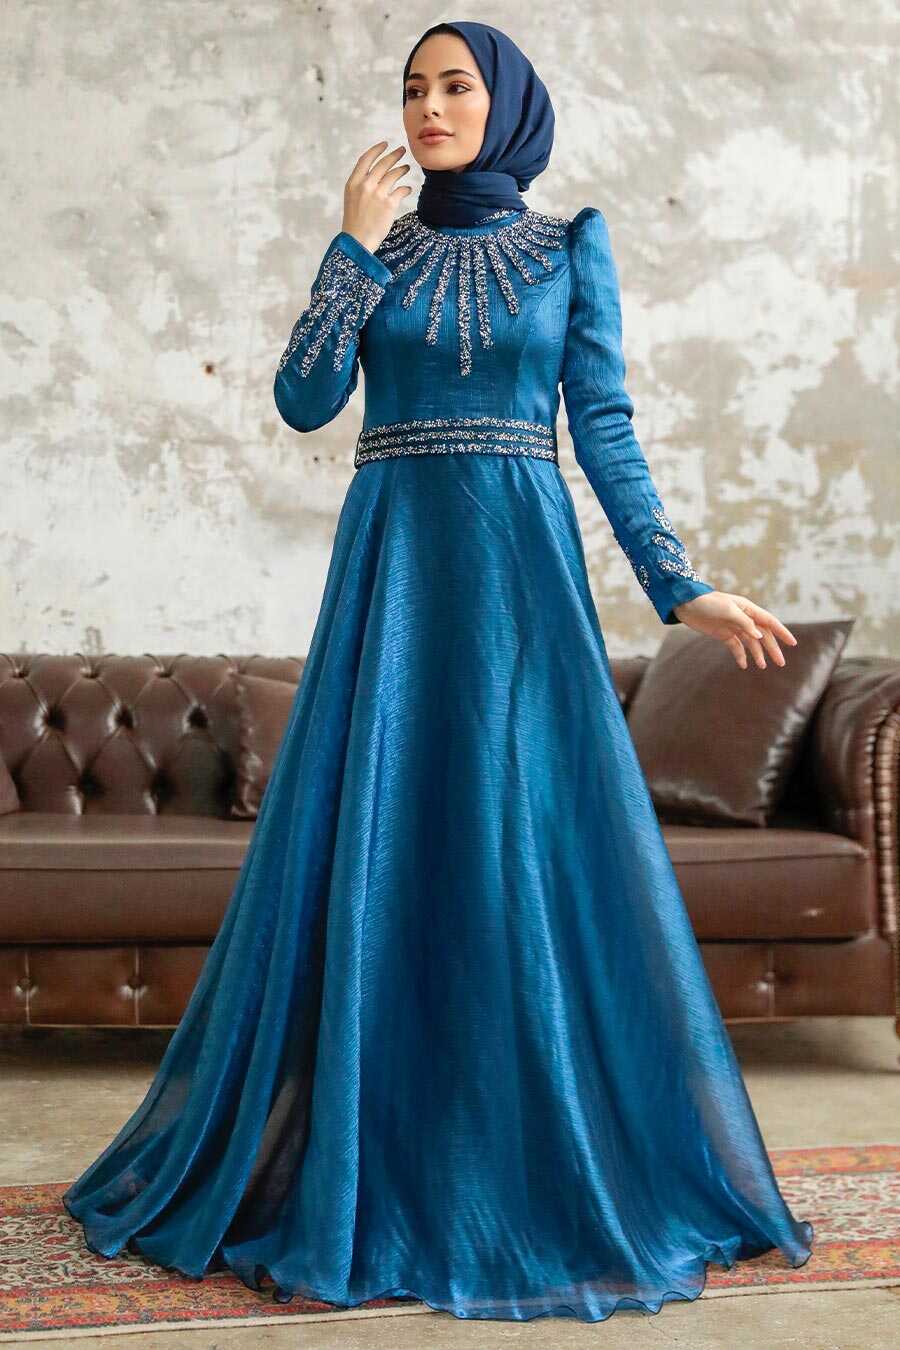 Neva Style - Luxury İndigo Blue Muslim Evening Gown 3774IM